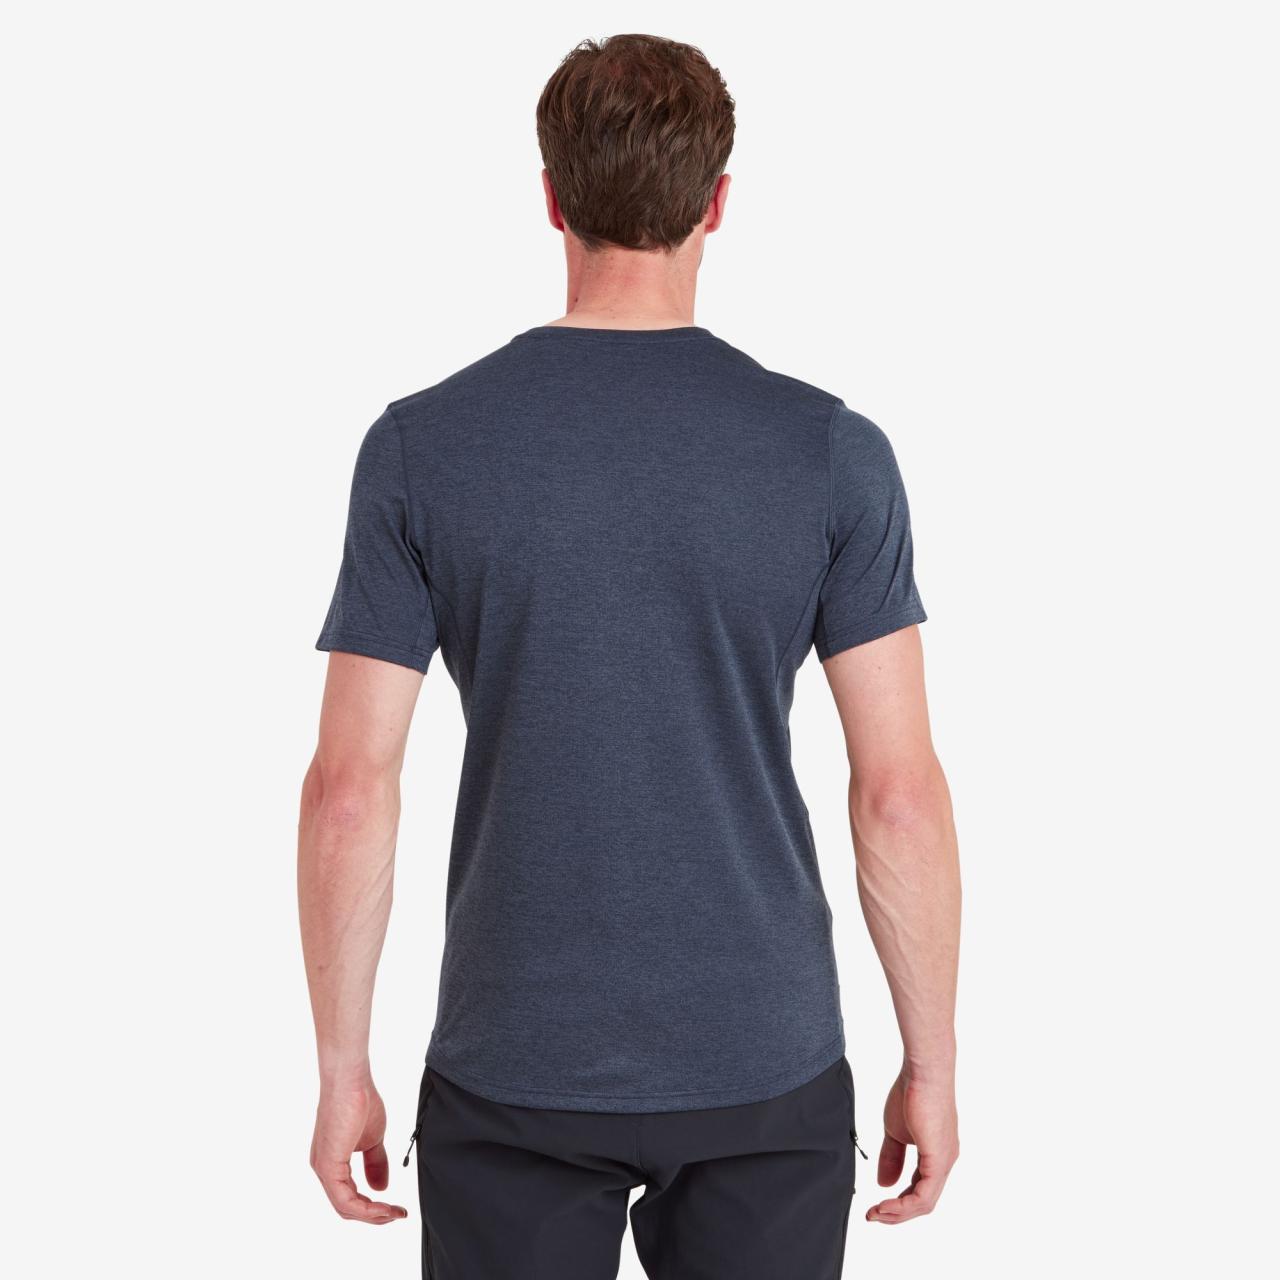 DART T-SHIRT-ECLIPSE BLUE-M pánské triko modré